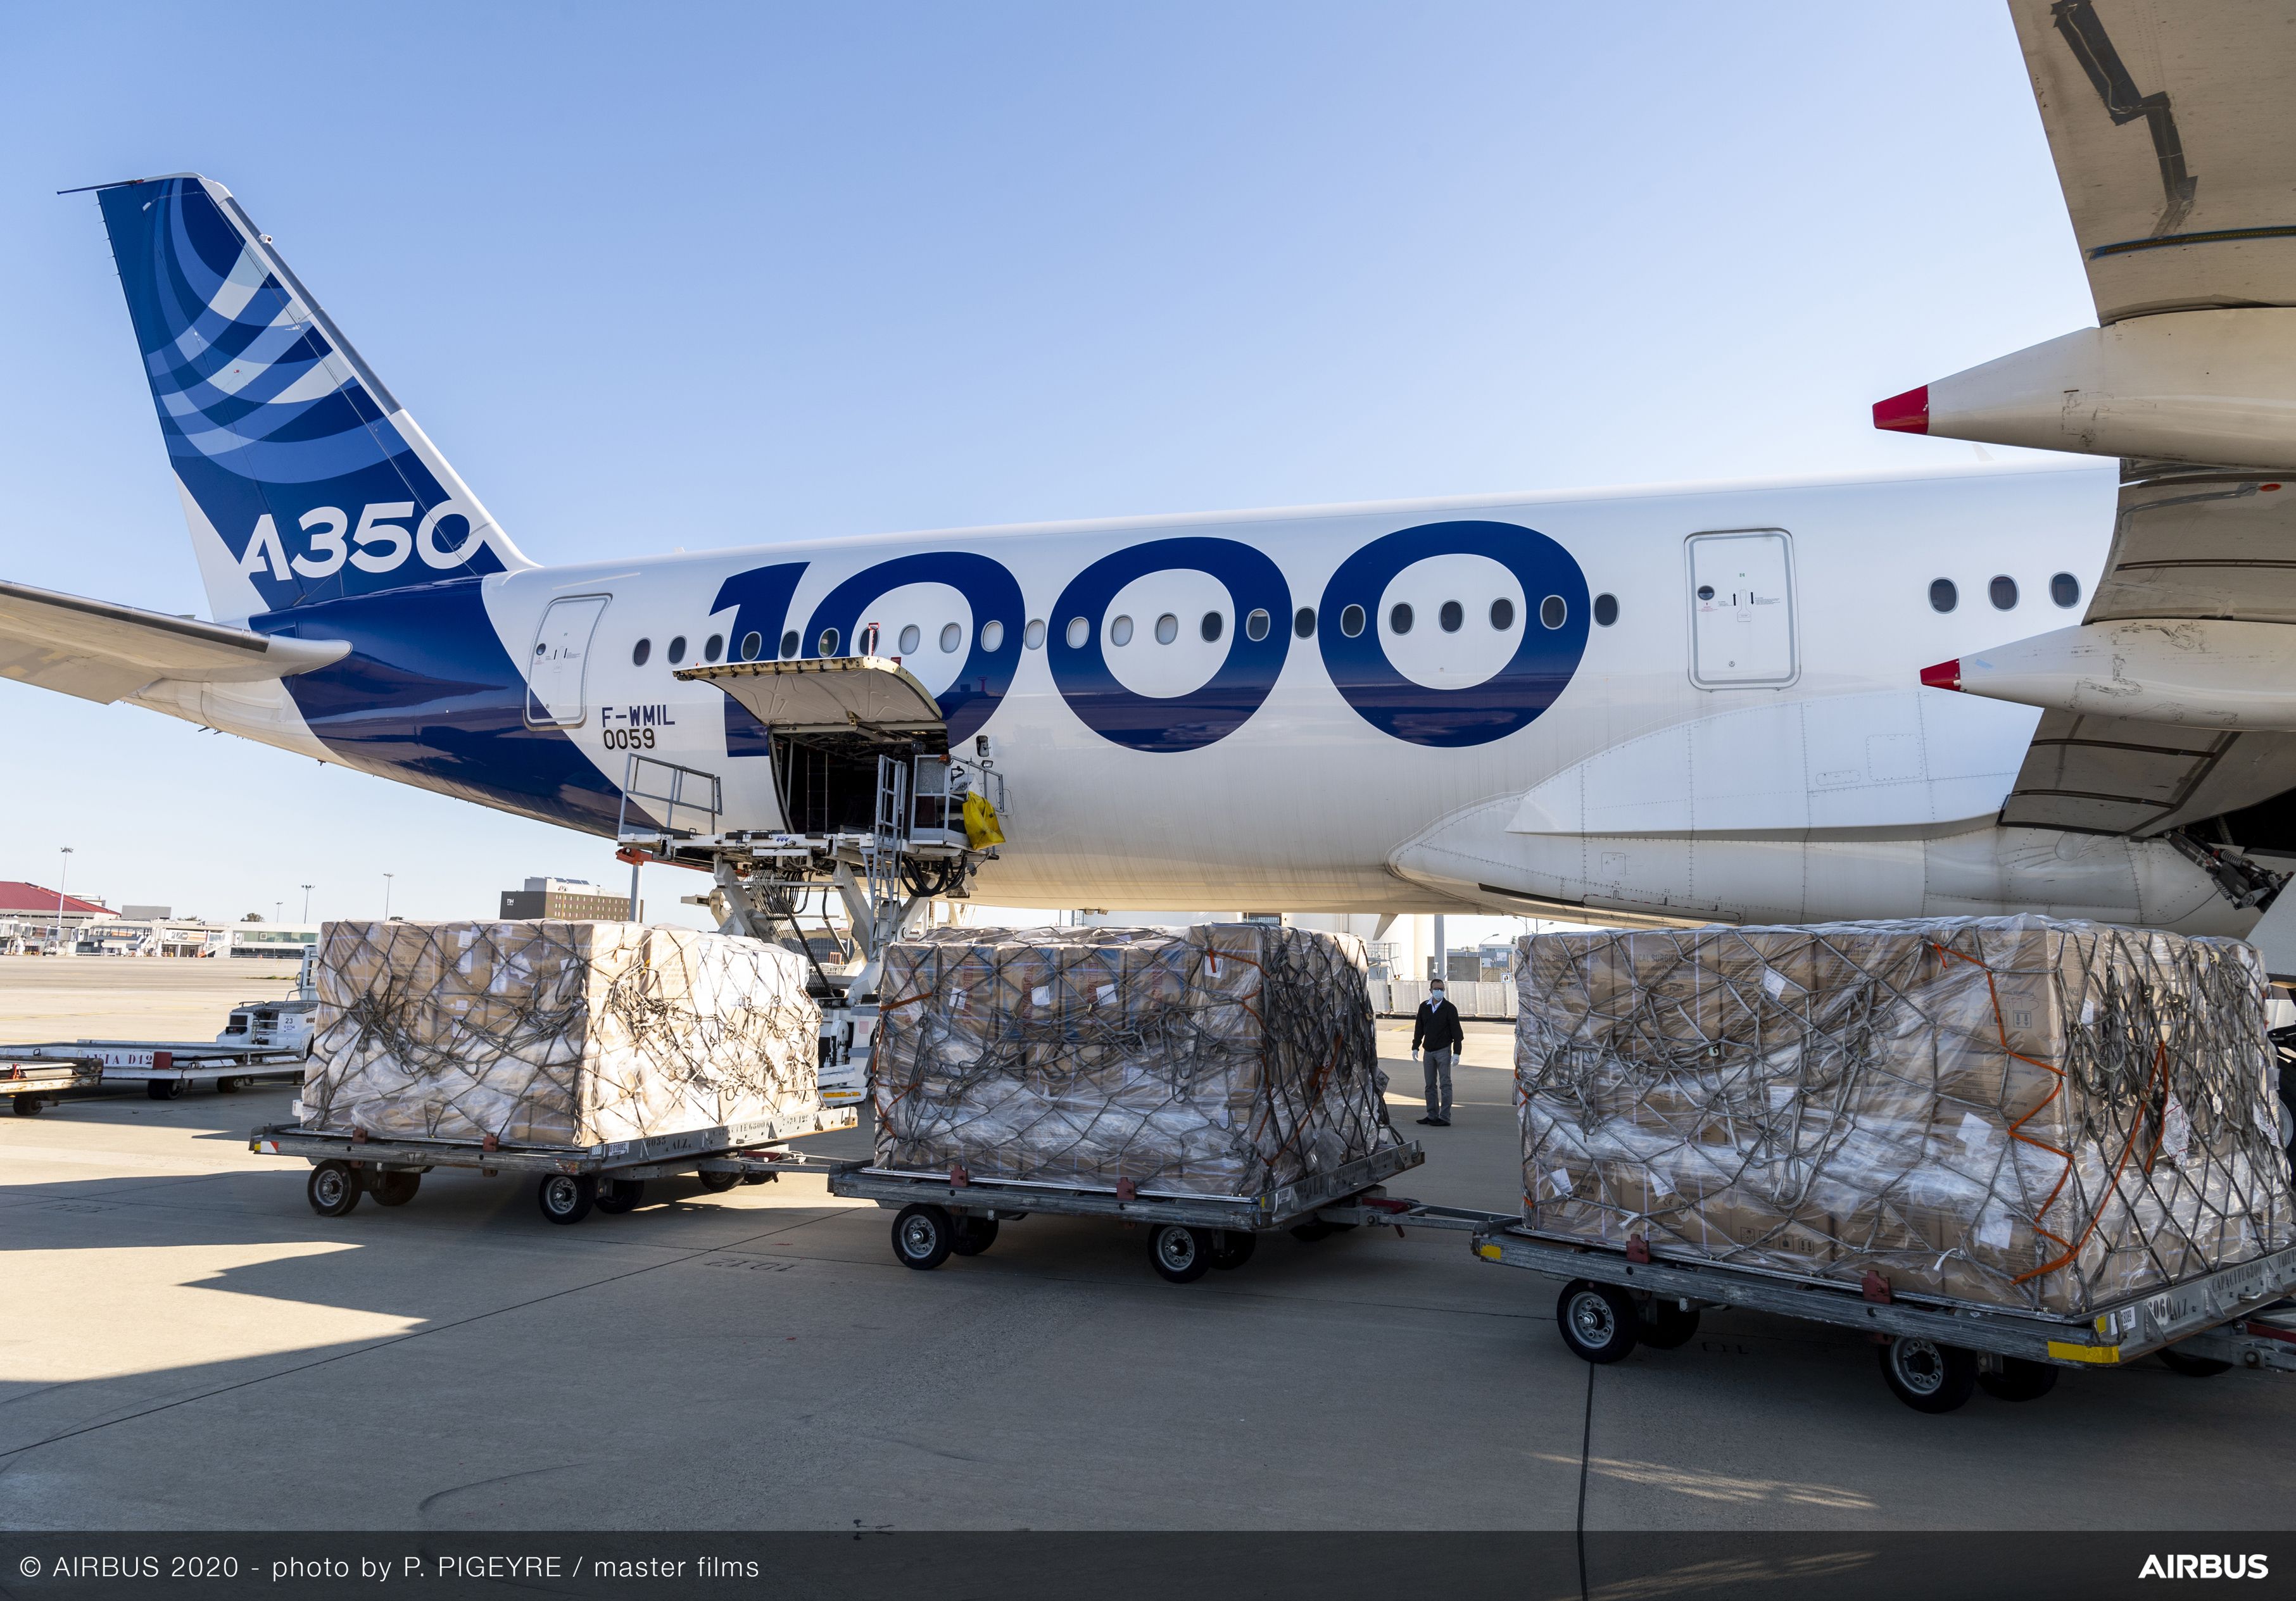 20200404-A350-1000 receives cargo in Tianjin_